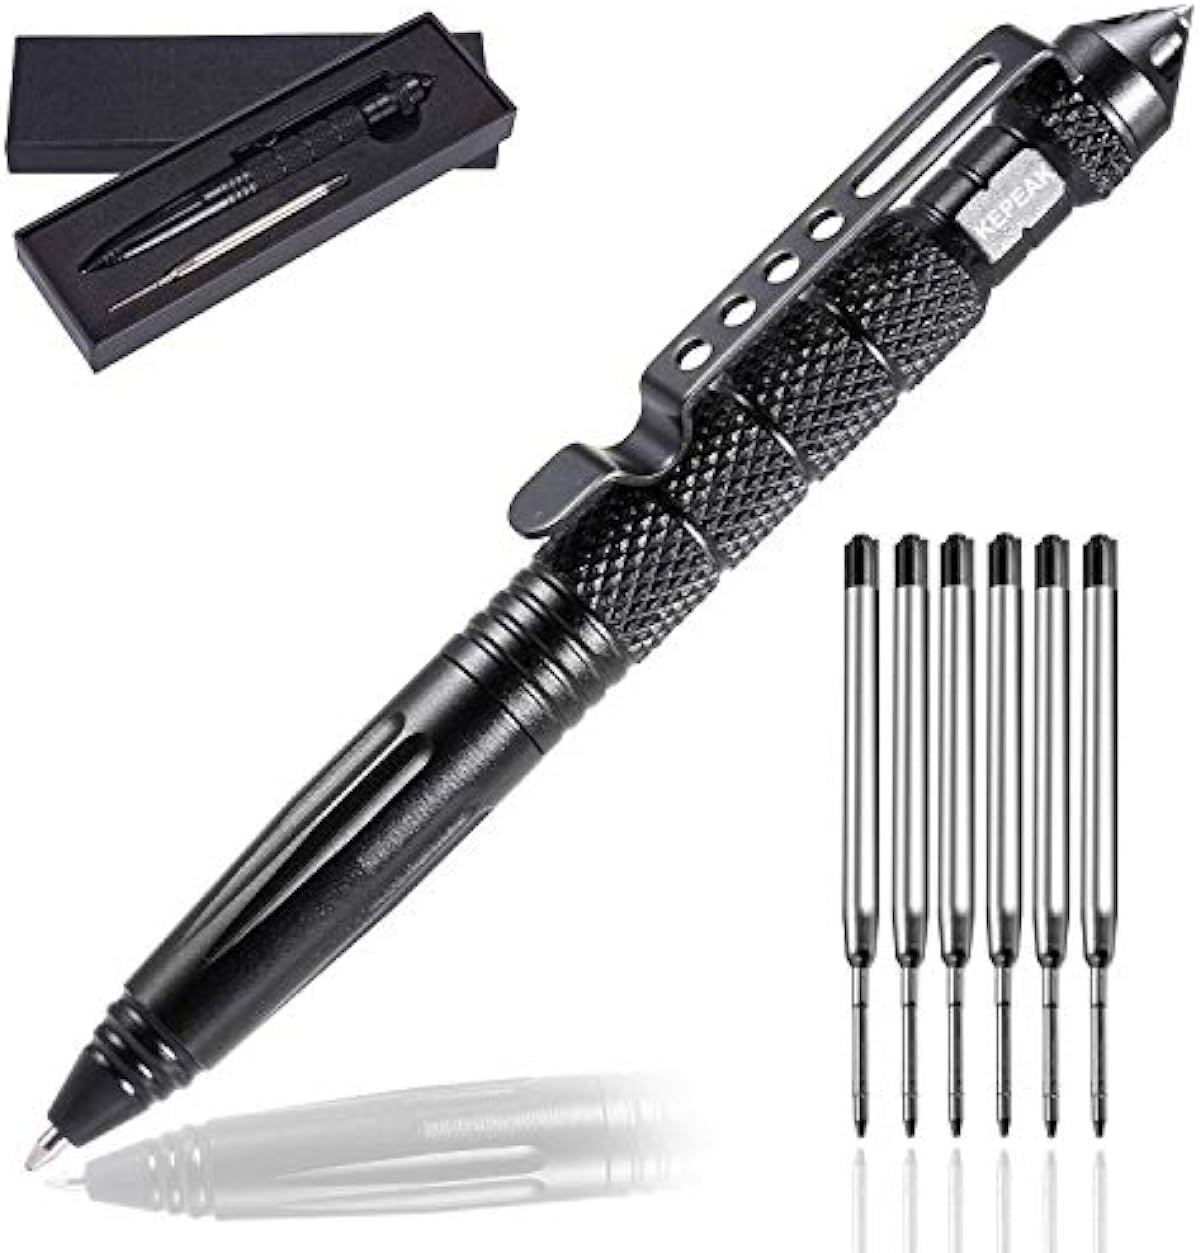 KEPEAK Military Tactical Pen, Professional Self Defense Pen, Emergency Glass Breaker Pen - Tungsten Steel, Writing Tool with 6 Refill